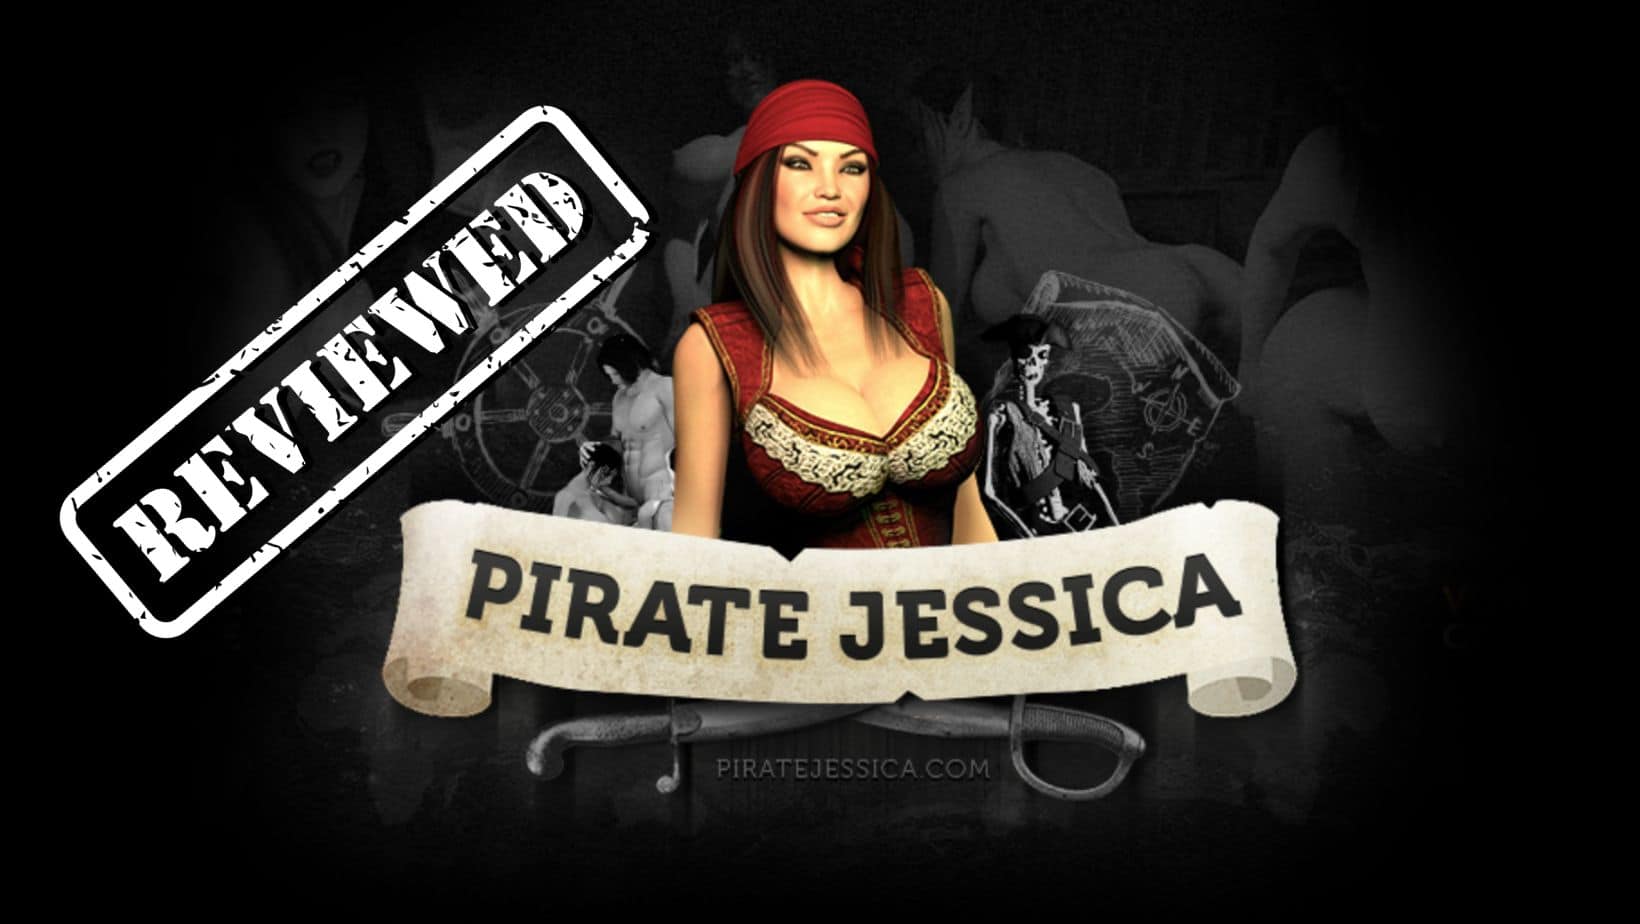 Pirate Jessica review – is it a legit website?